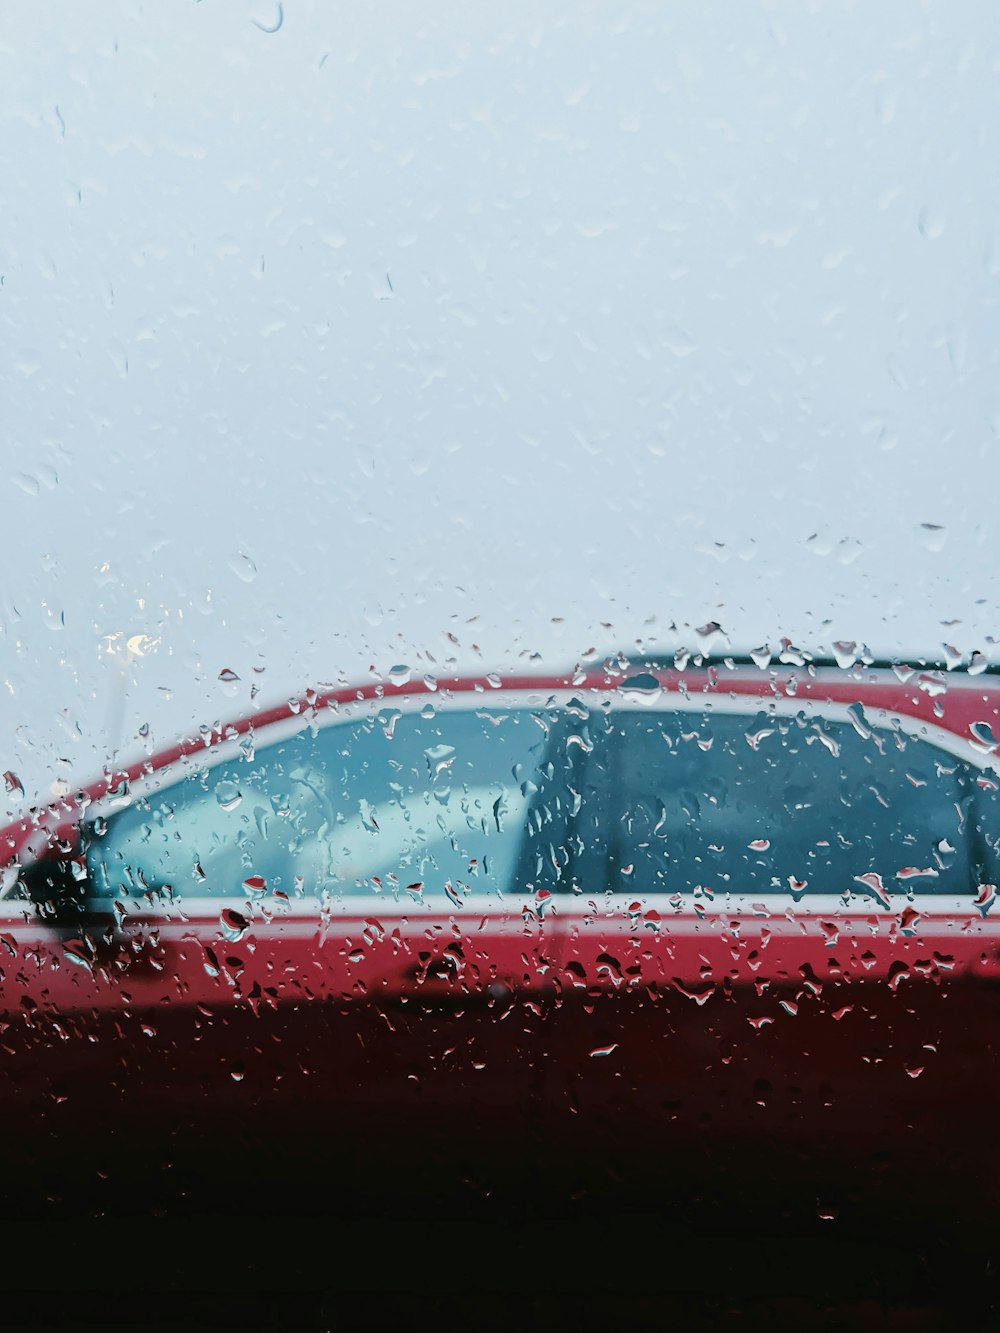 a red car is seen through a rain soaked window